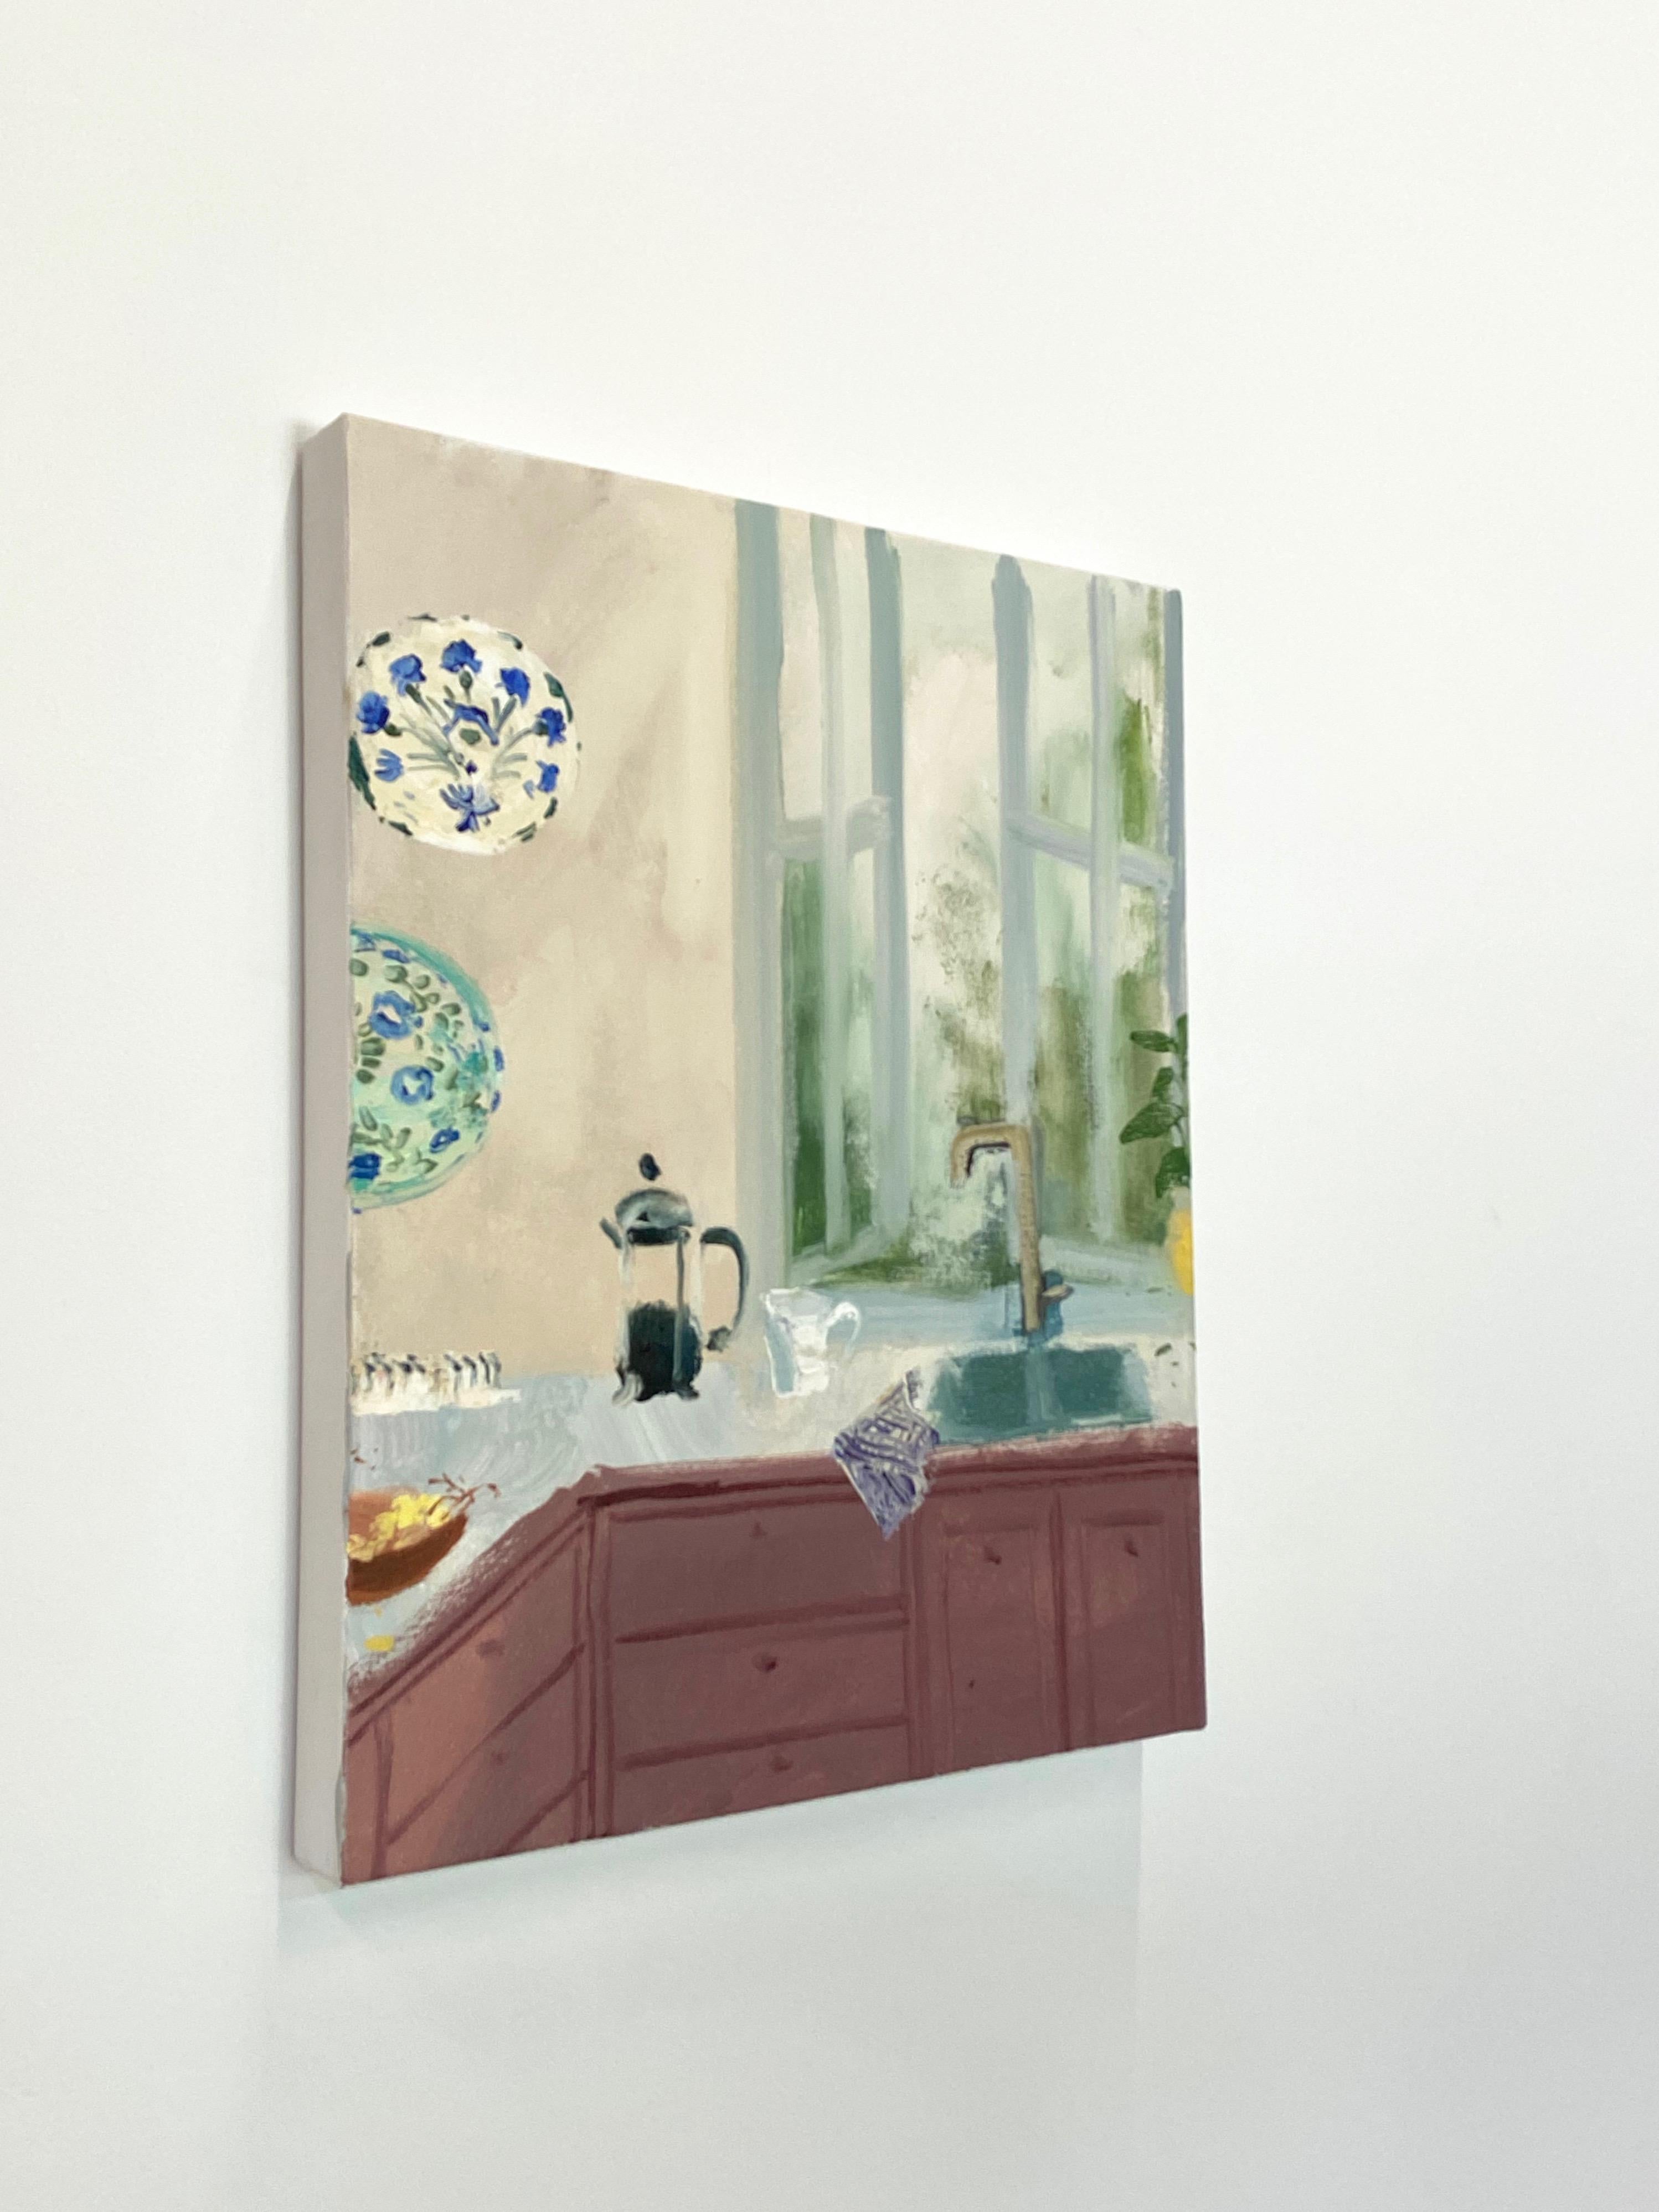 Aztec Mocha, Kitchen, Blue China Plates, Plants, Open Window Interior Still Life - Contemporary Painting by Melanie Parke